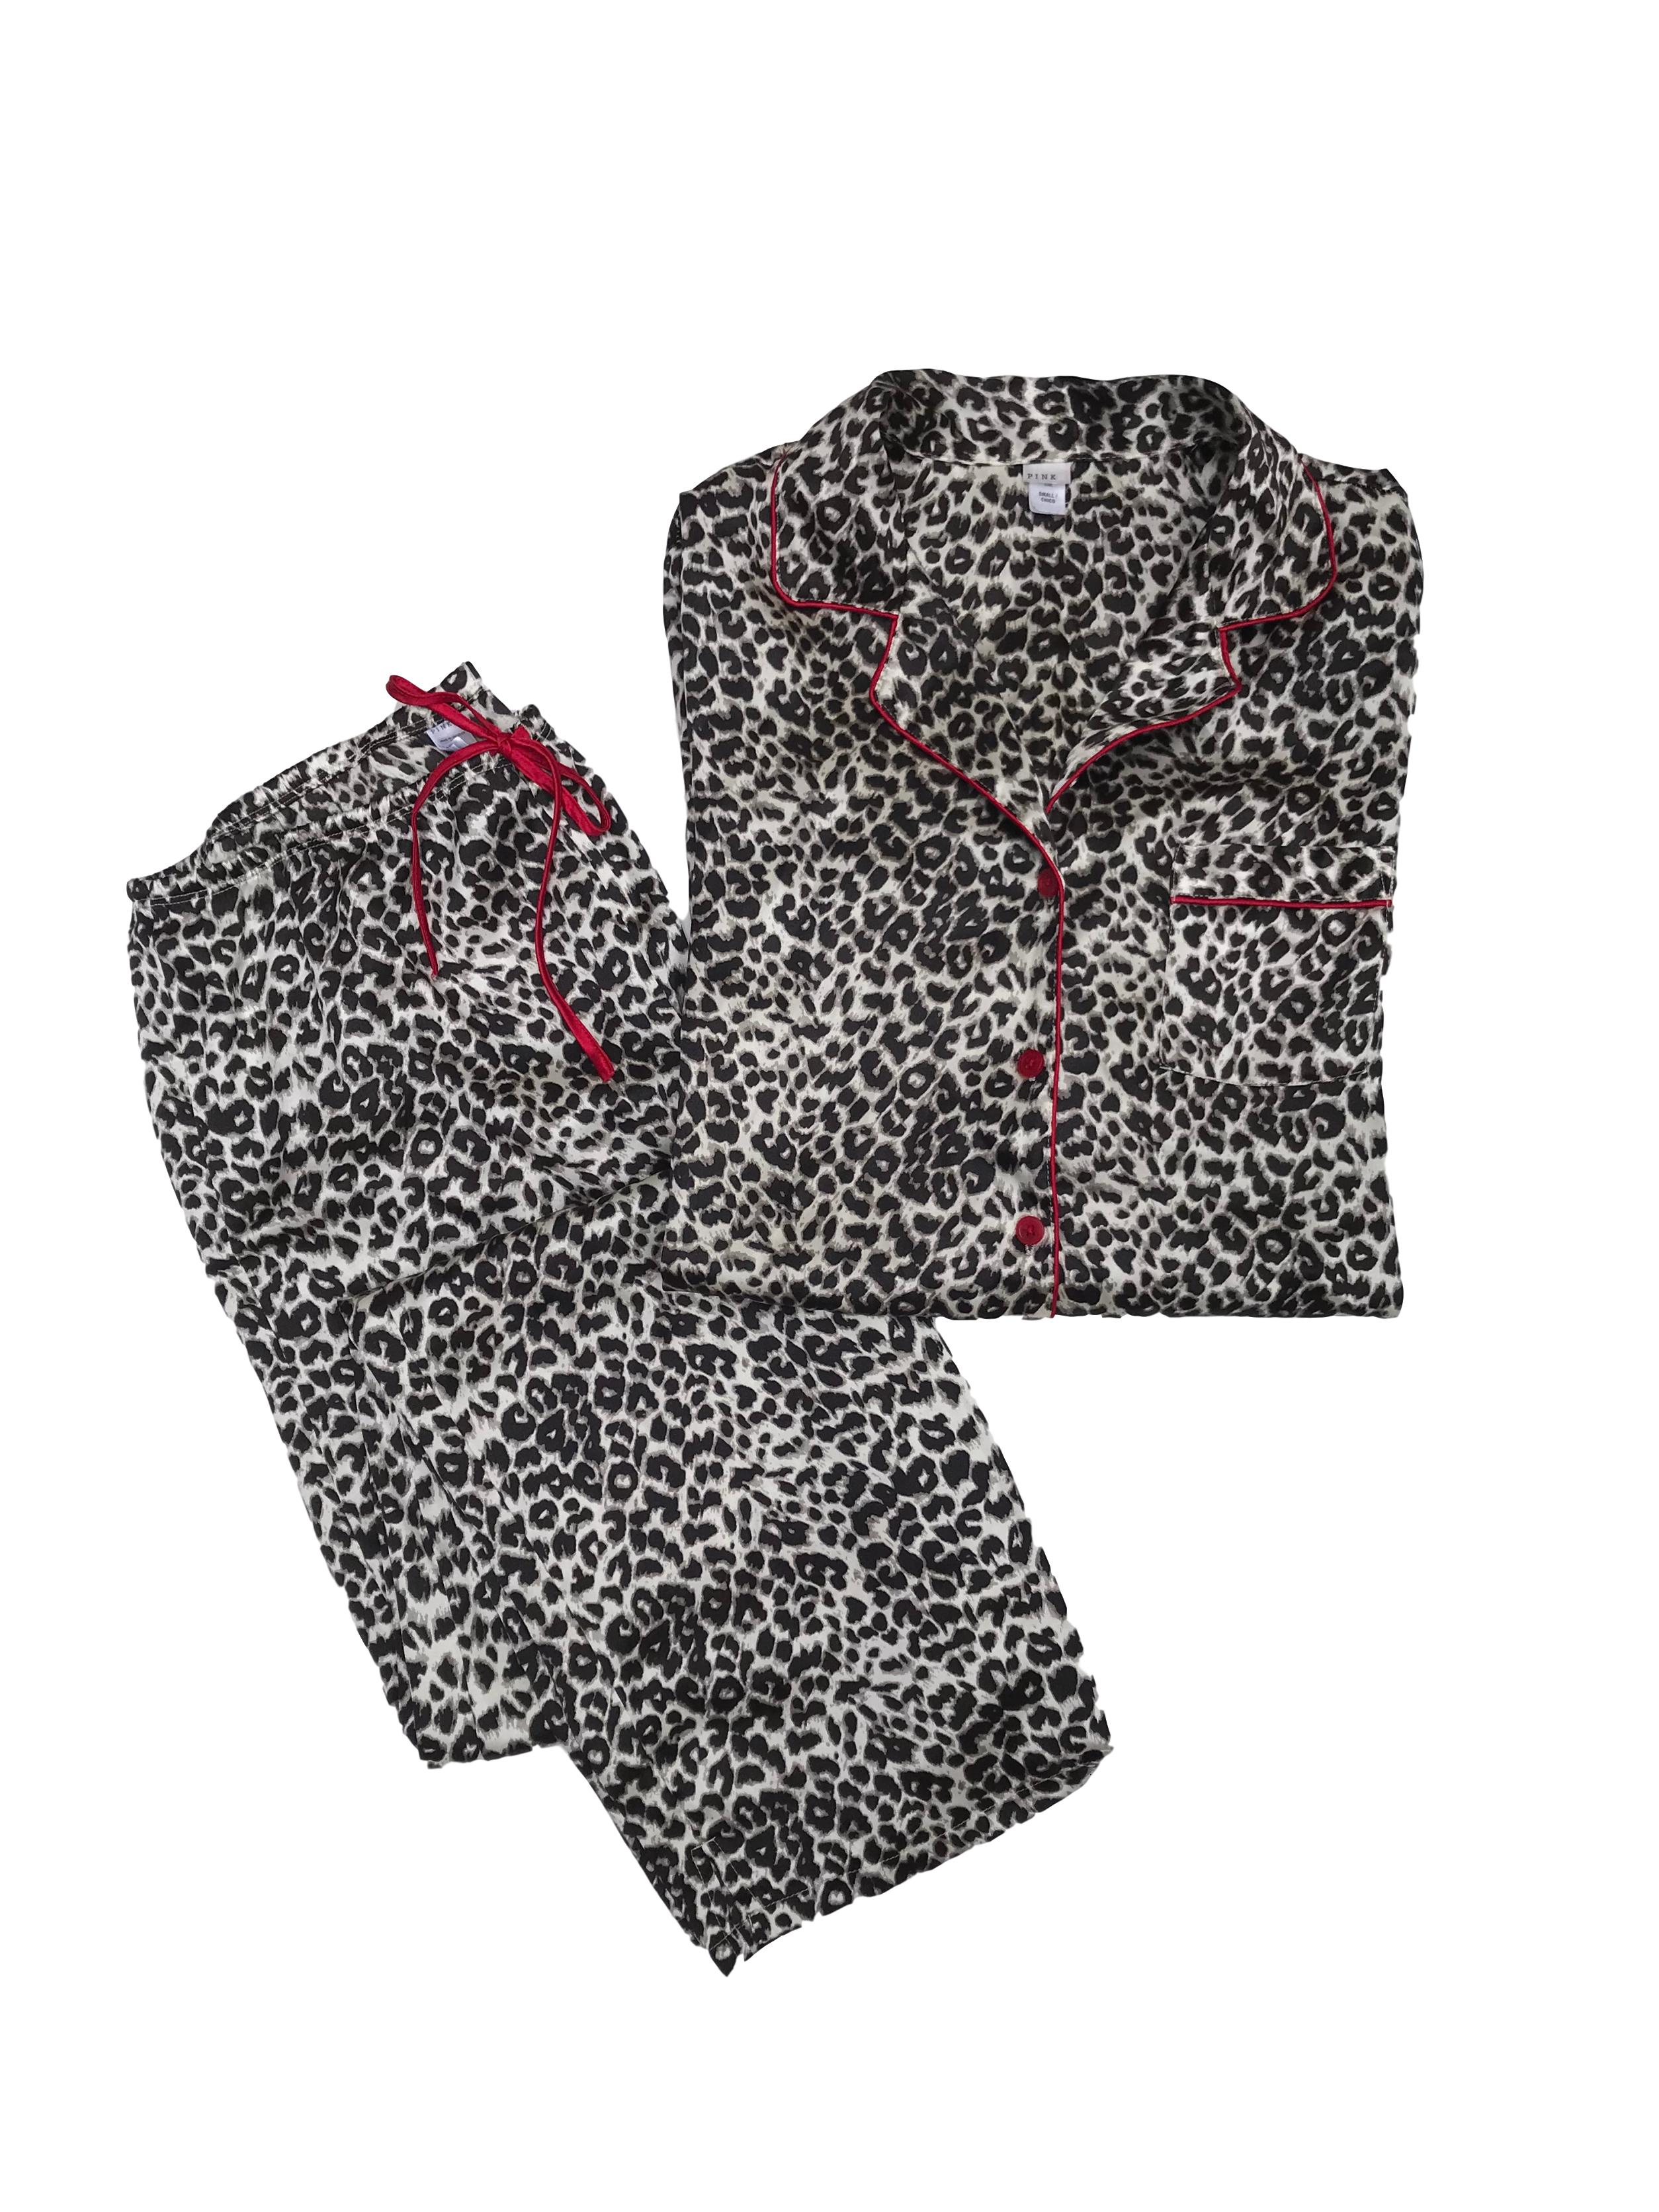 Pijama animal print tipo seda con ribetes rojos, cintura de pantalón regulable